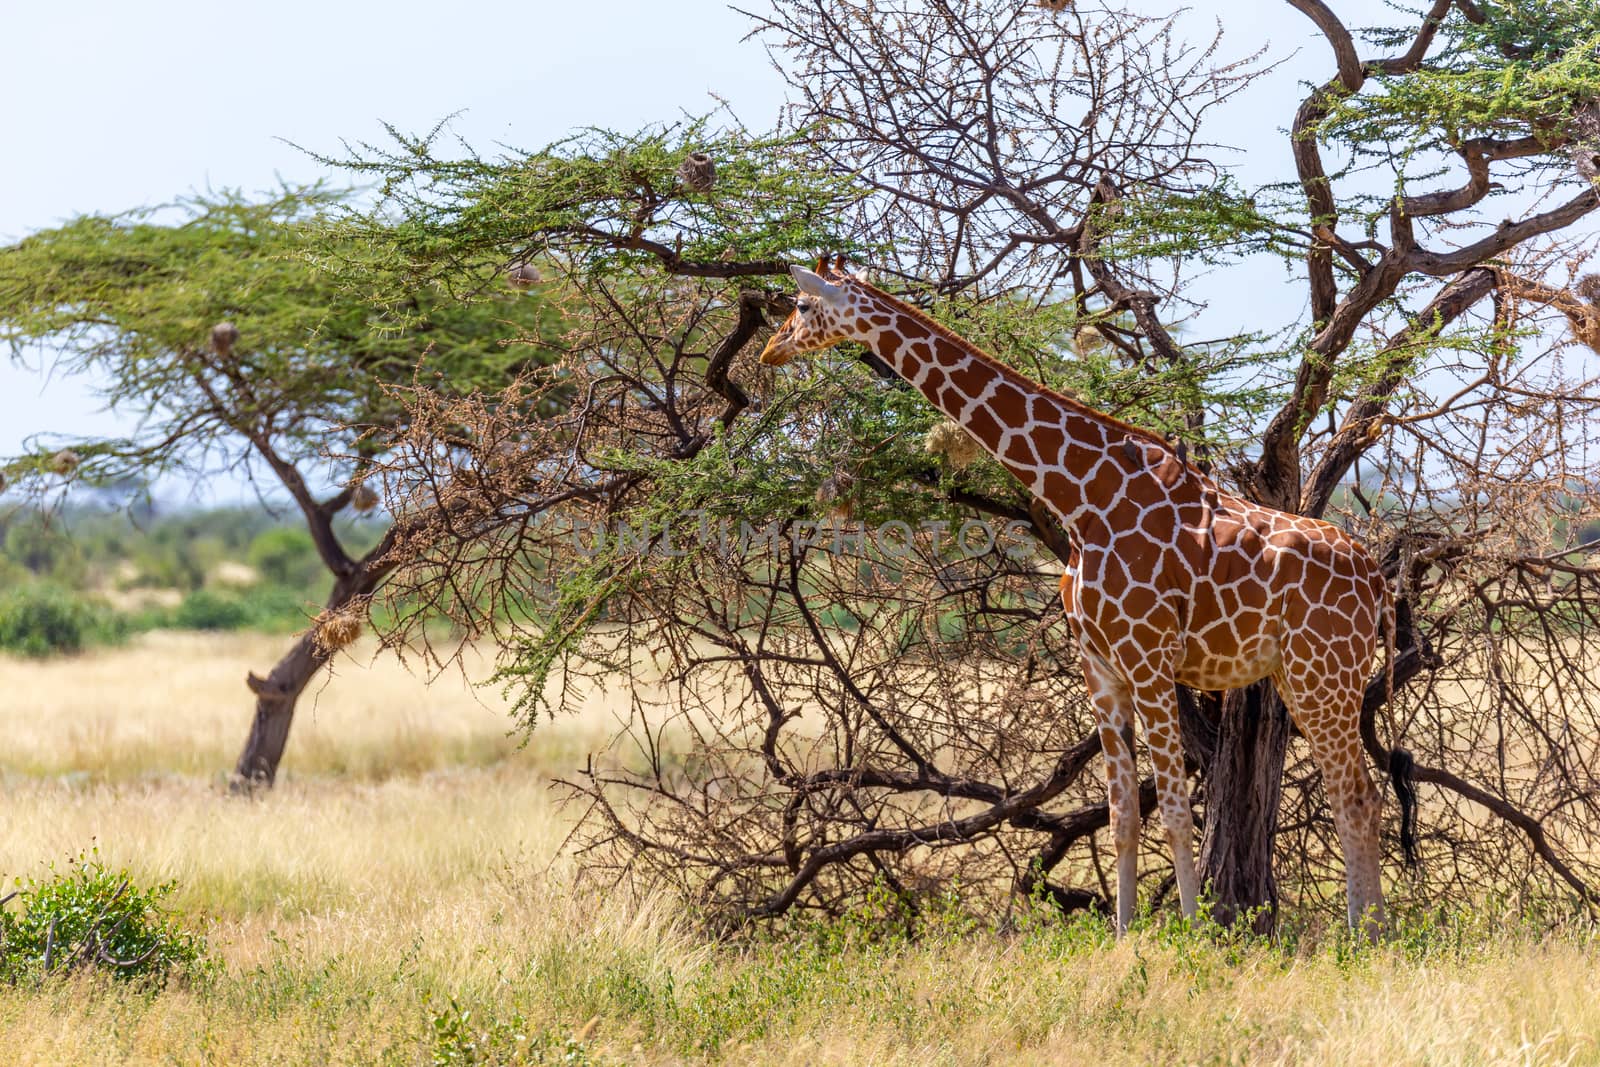 A Somalia giraffes eat the leaves of acacia trees